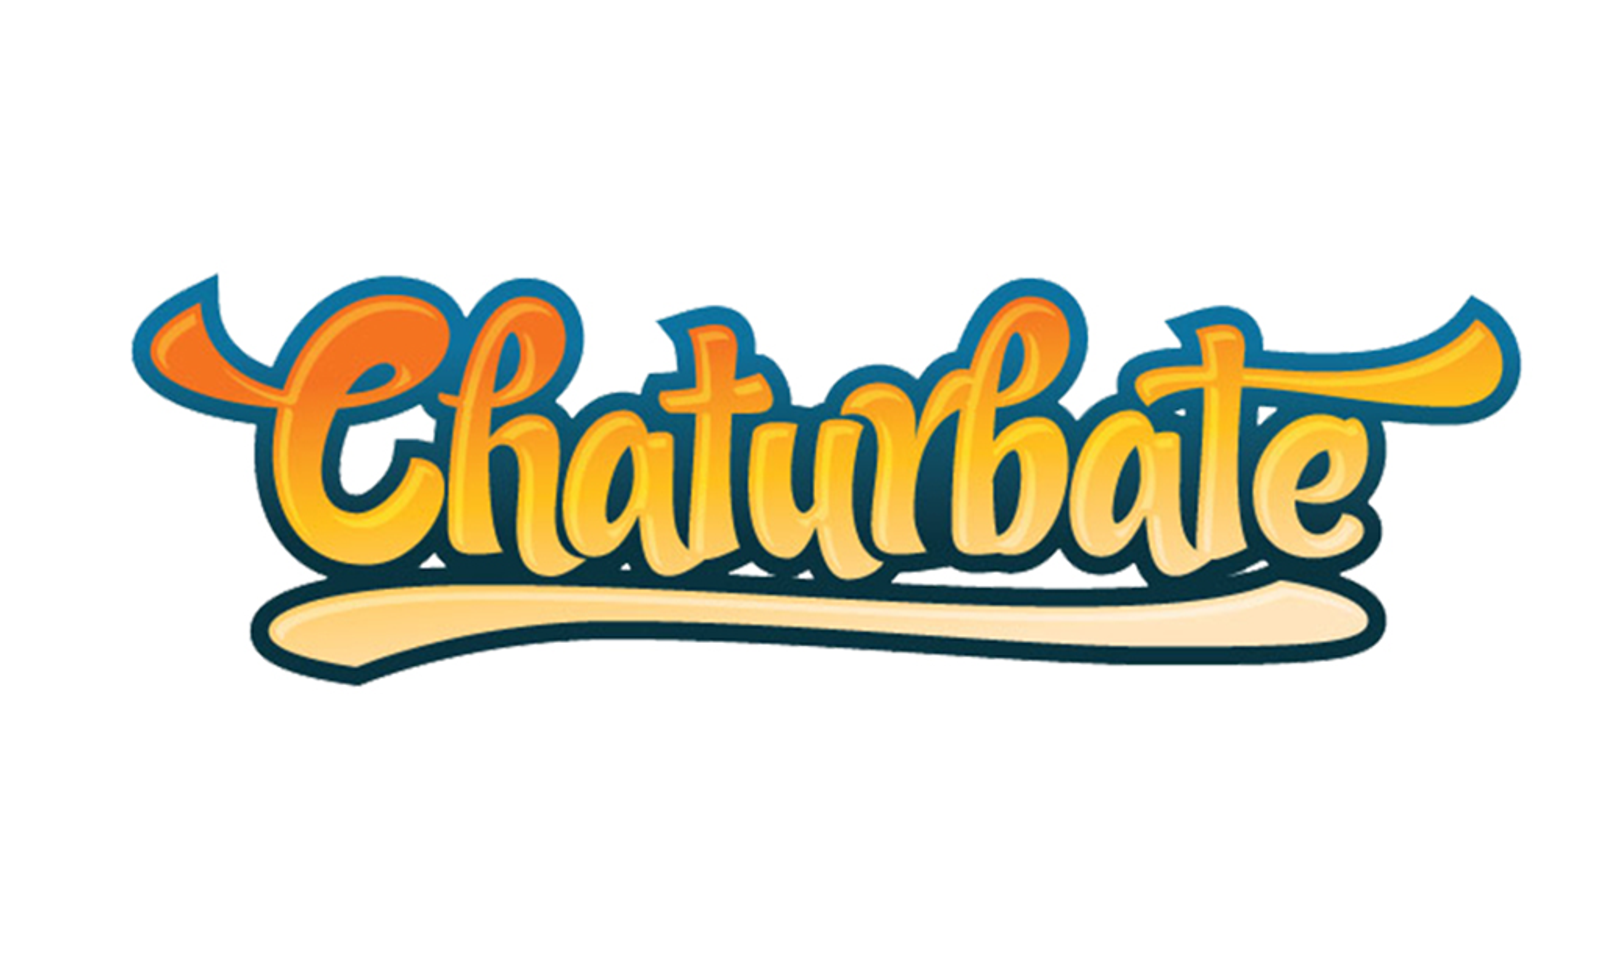 Chaturbate Congratulates Its Winning 2021 TEA Broadcasters